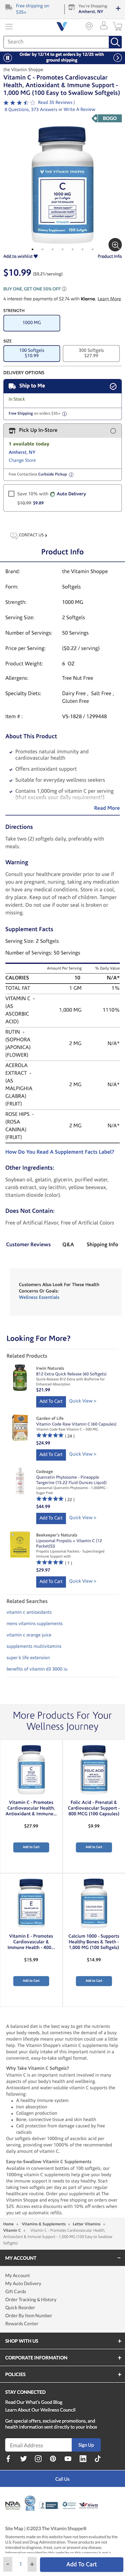 Mobile screenshot of The Vitamin Shoppe